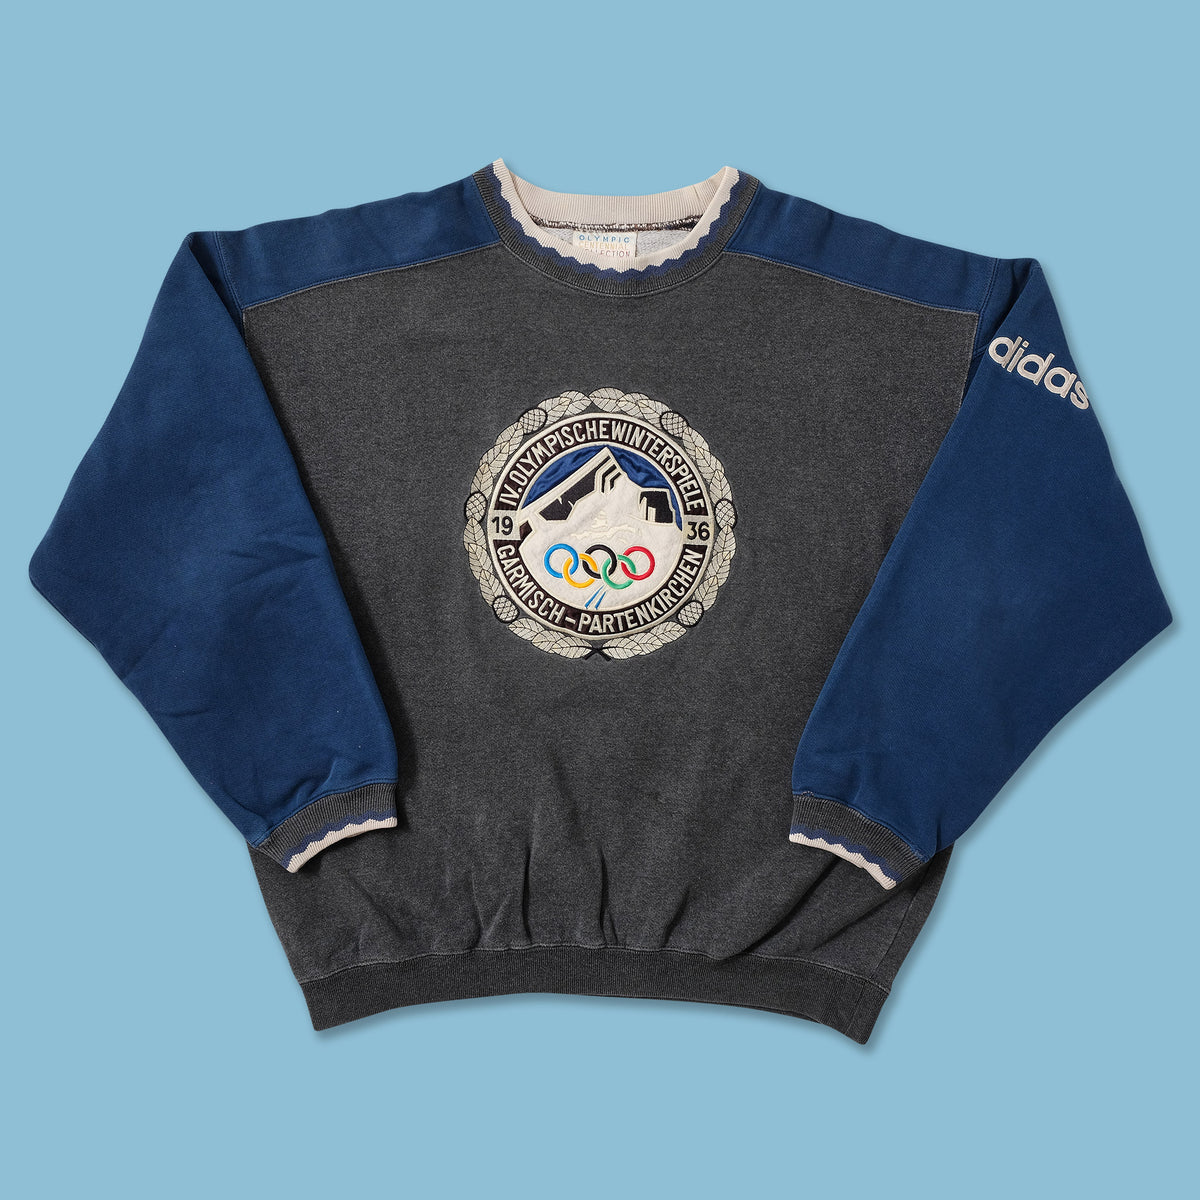 Vintage adidas Garmisch Olympics '36 